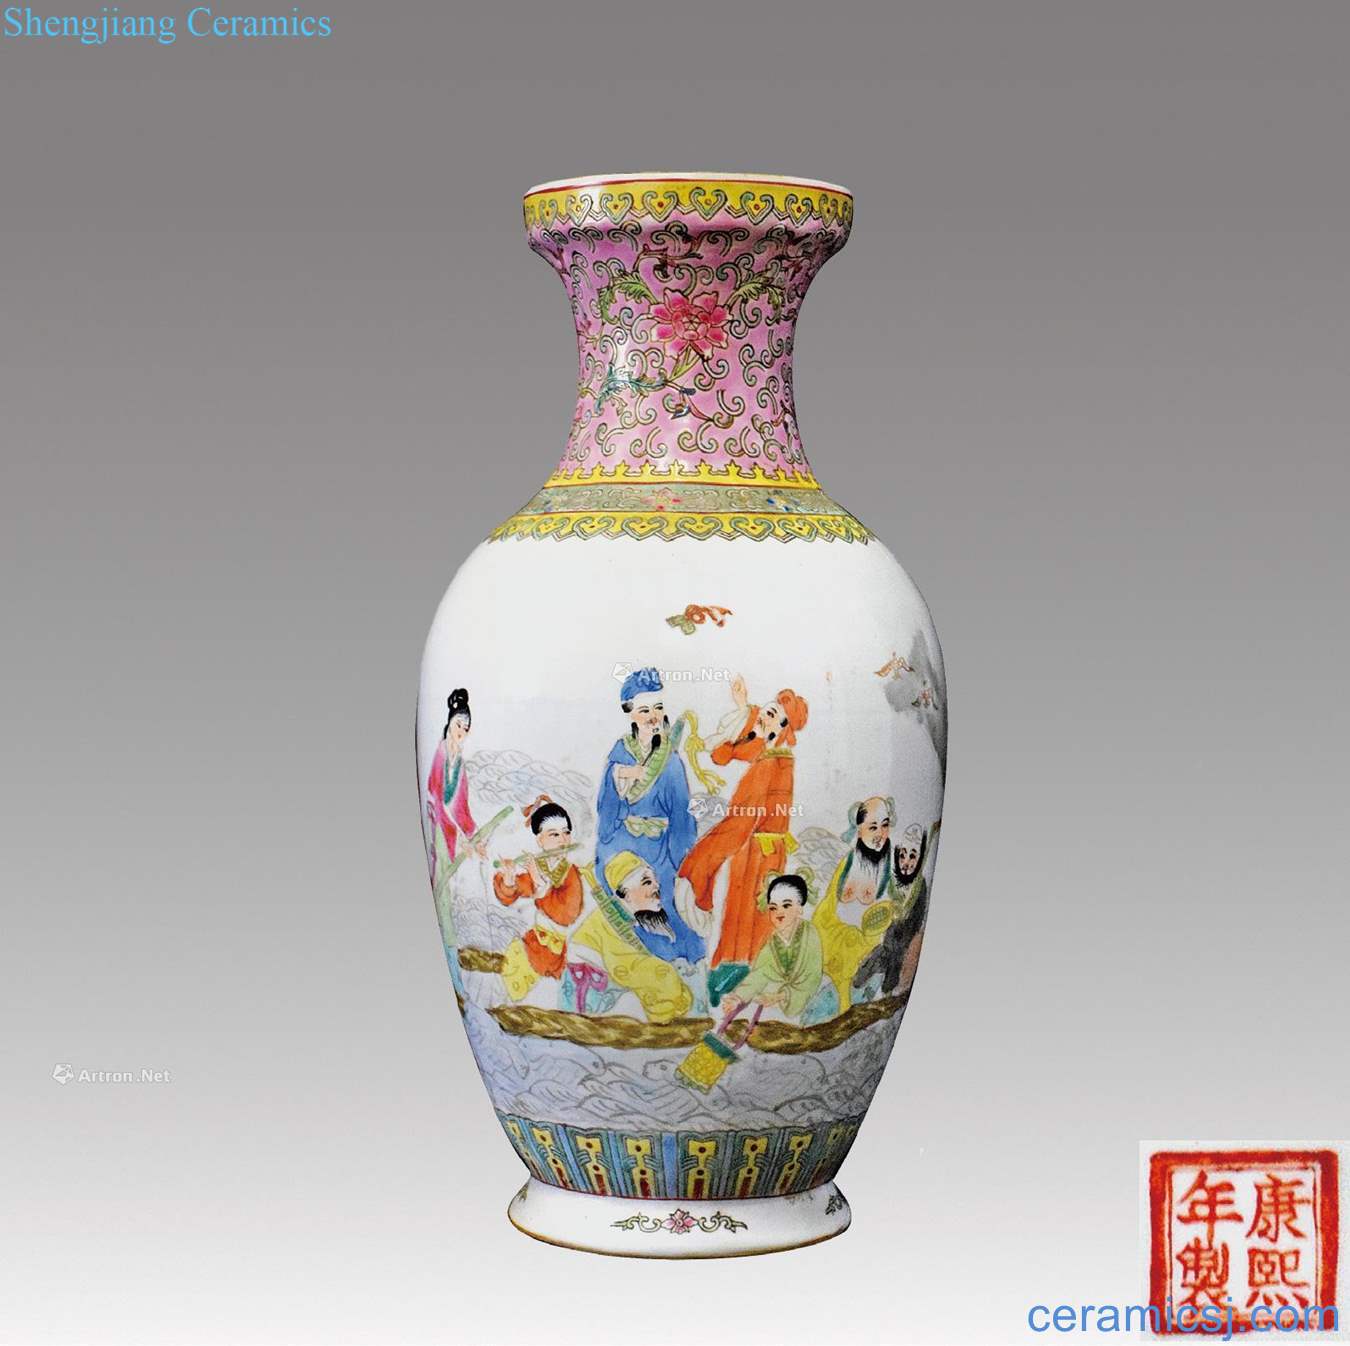 Pastel reign of qing emperor guangxu of the reward bottle